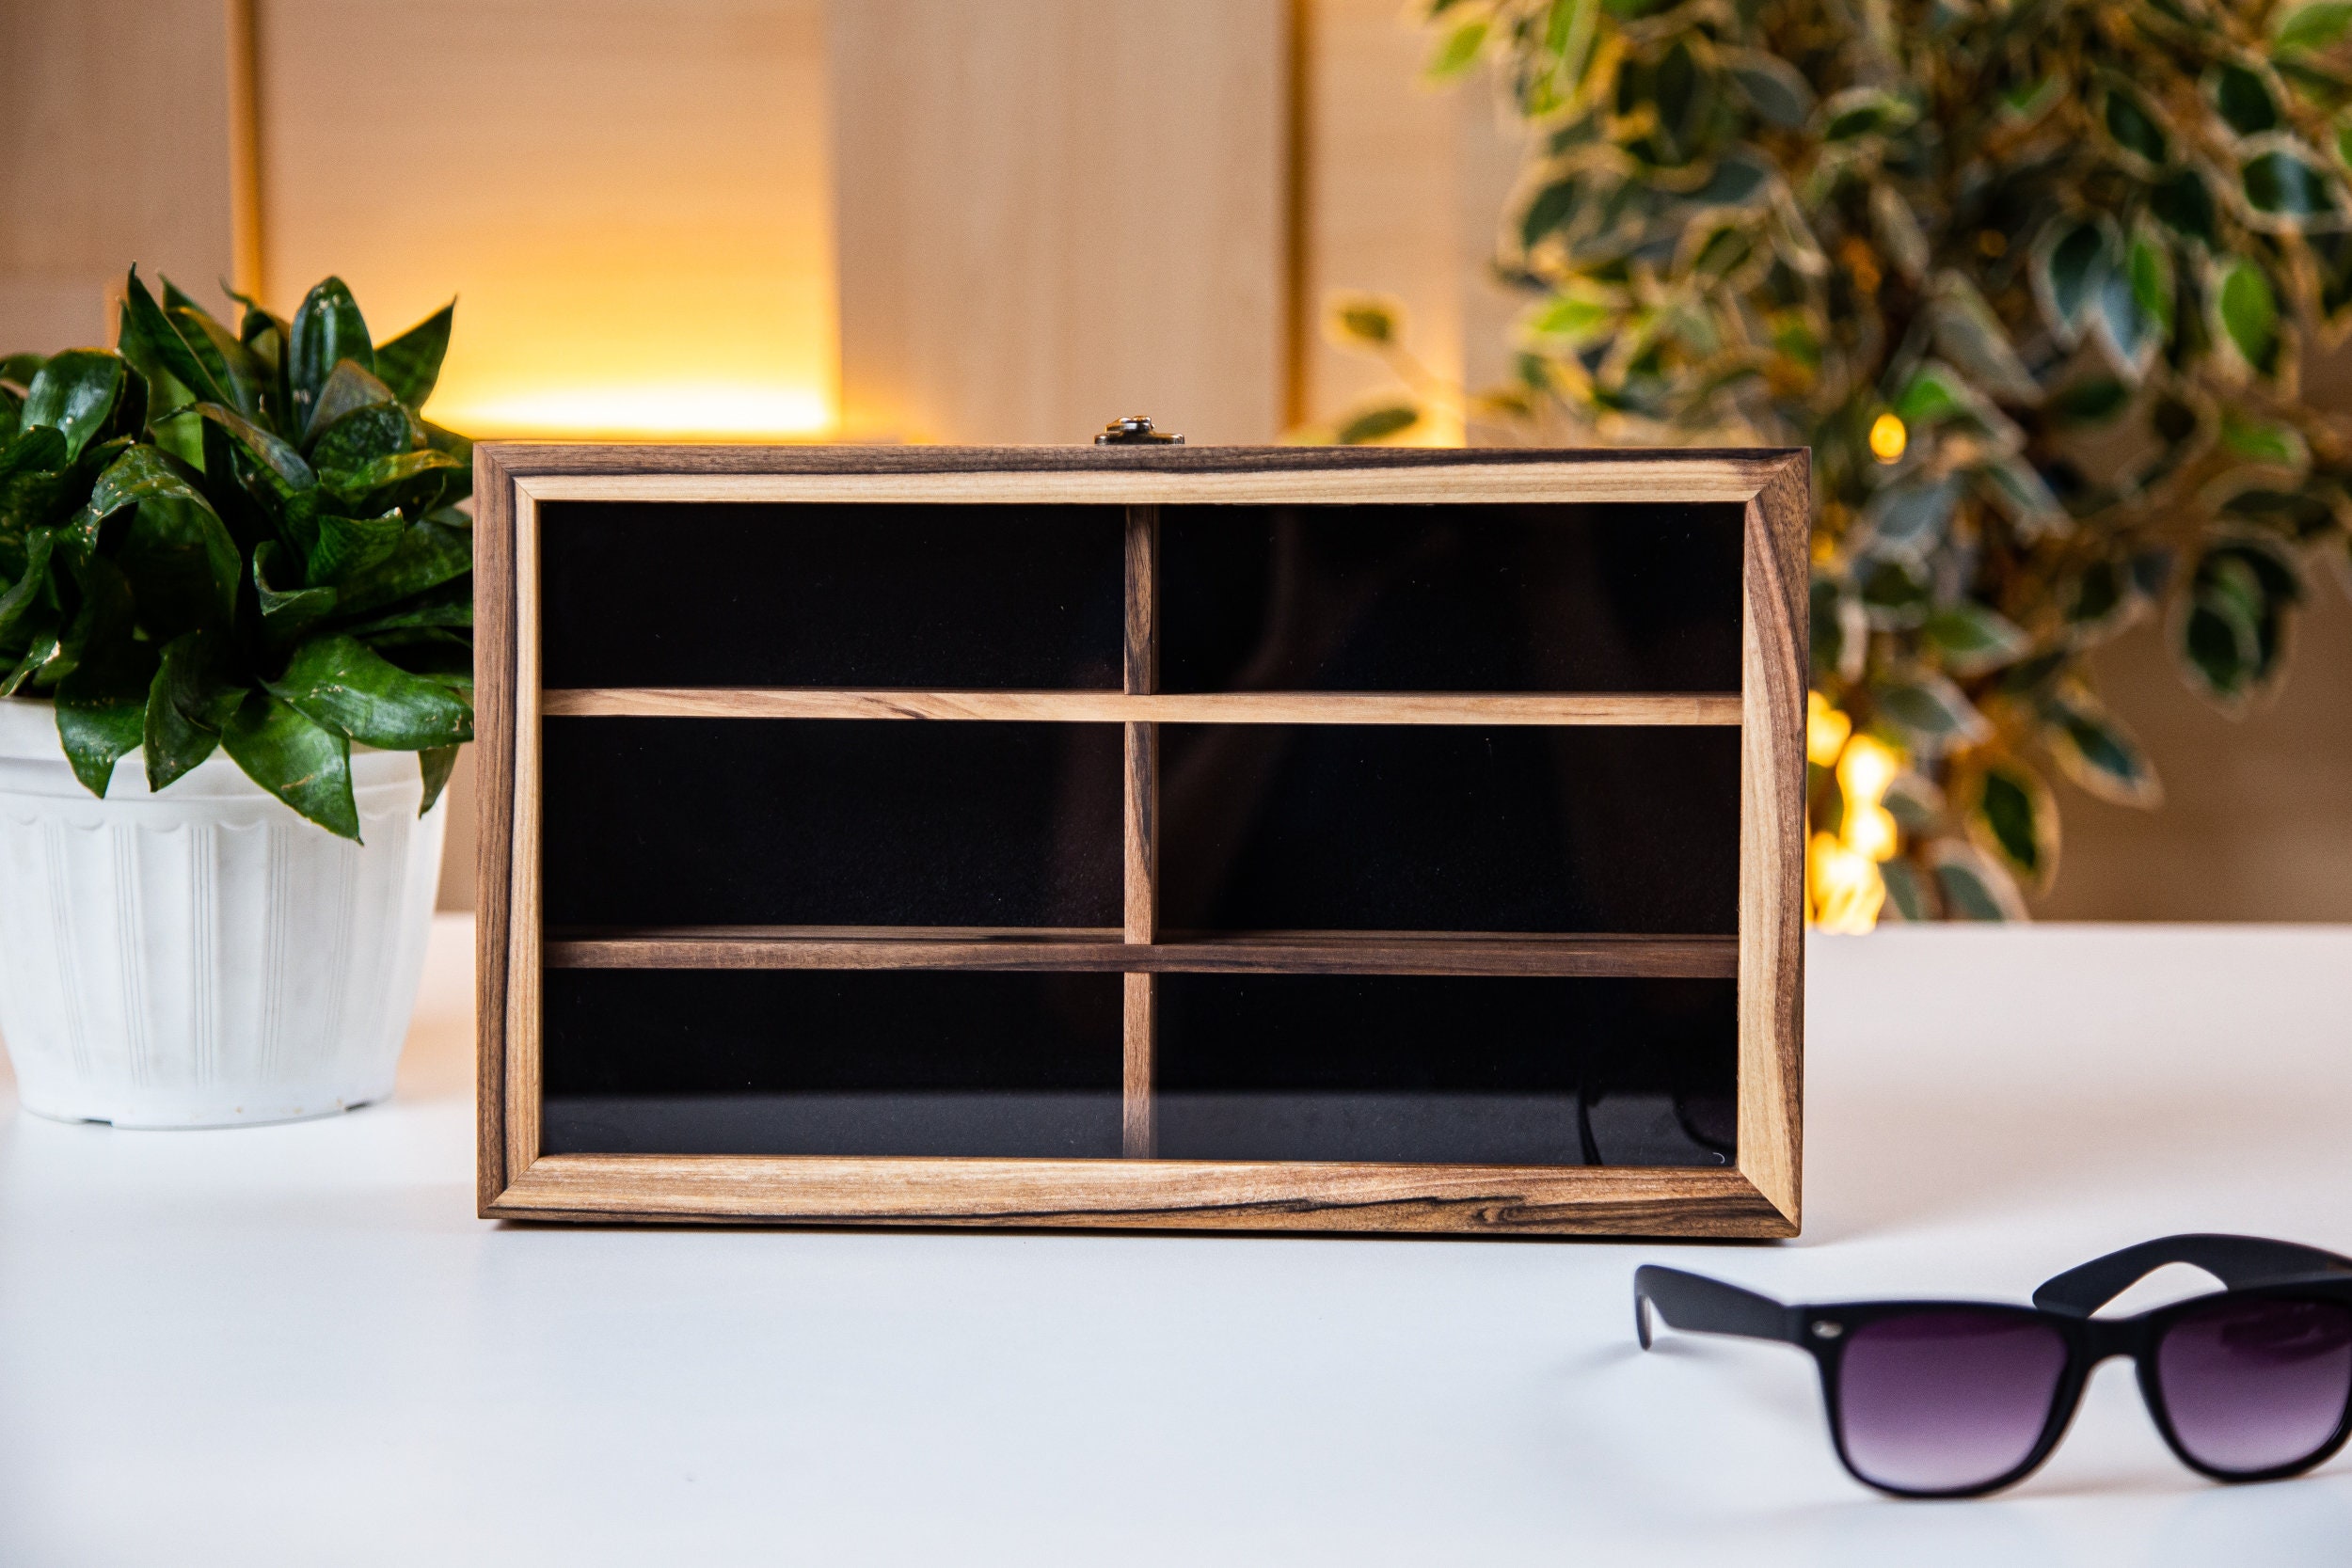 Wood eyeglass box - .de